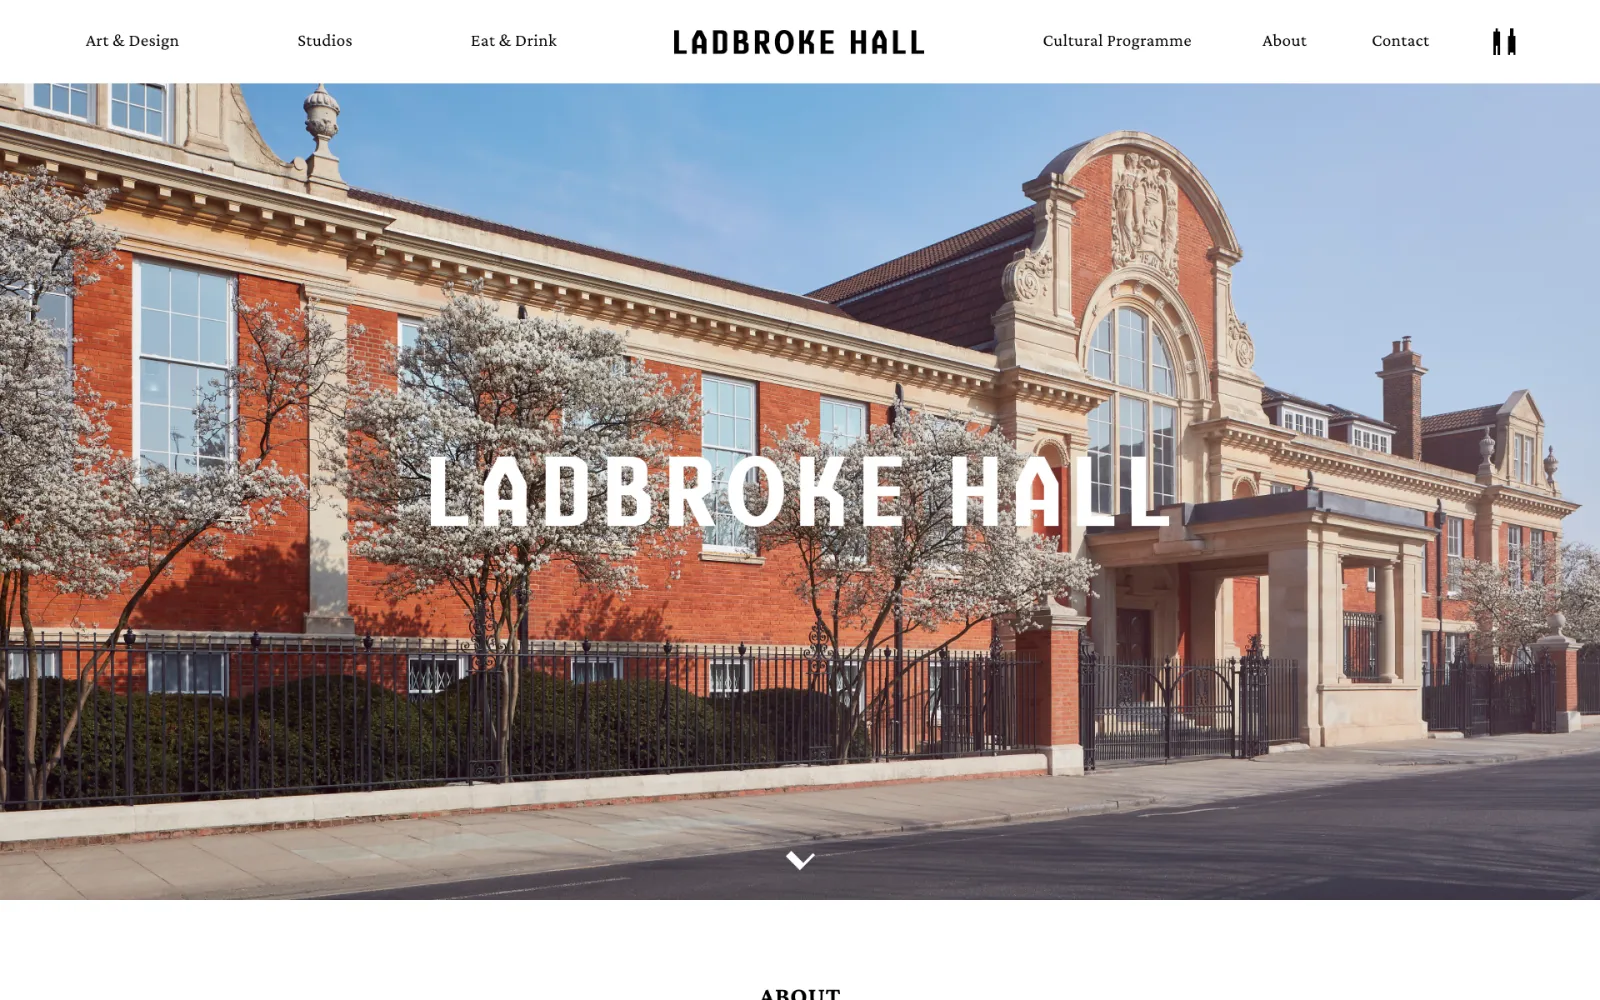 An image of the Ladbroke Hall member portal